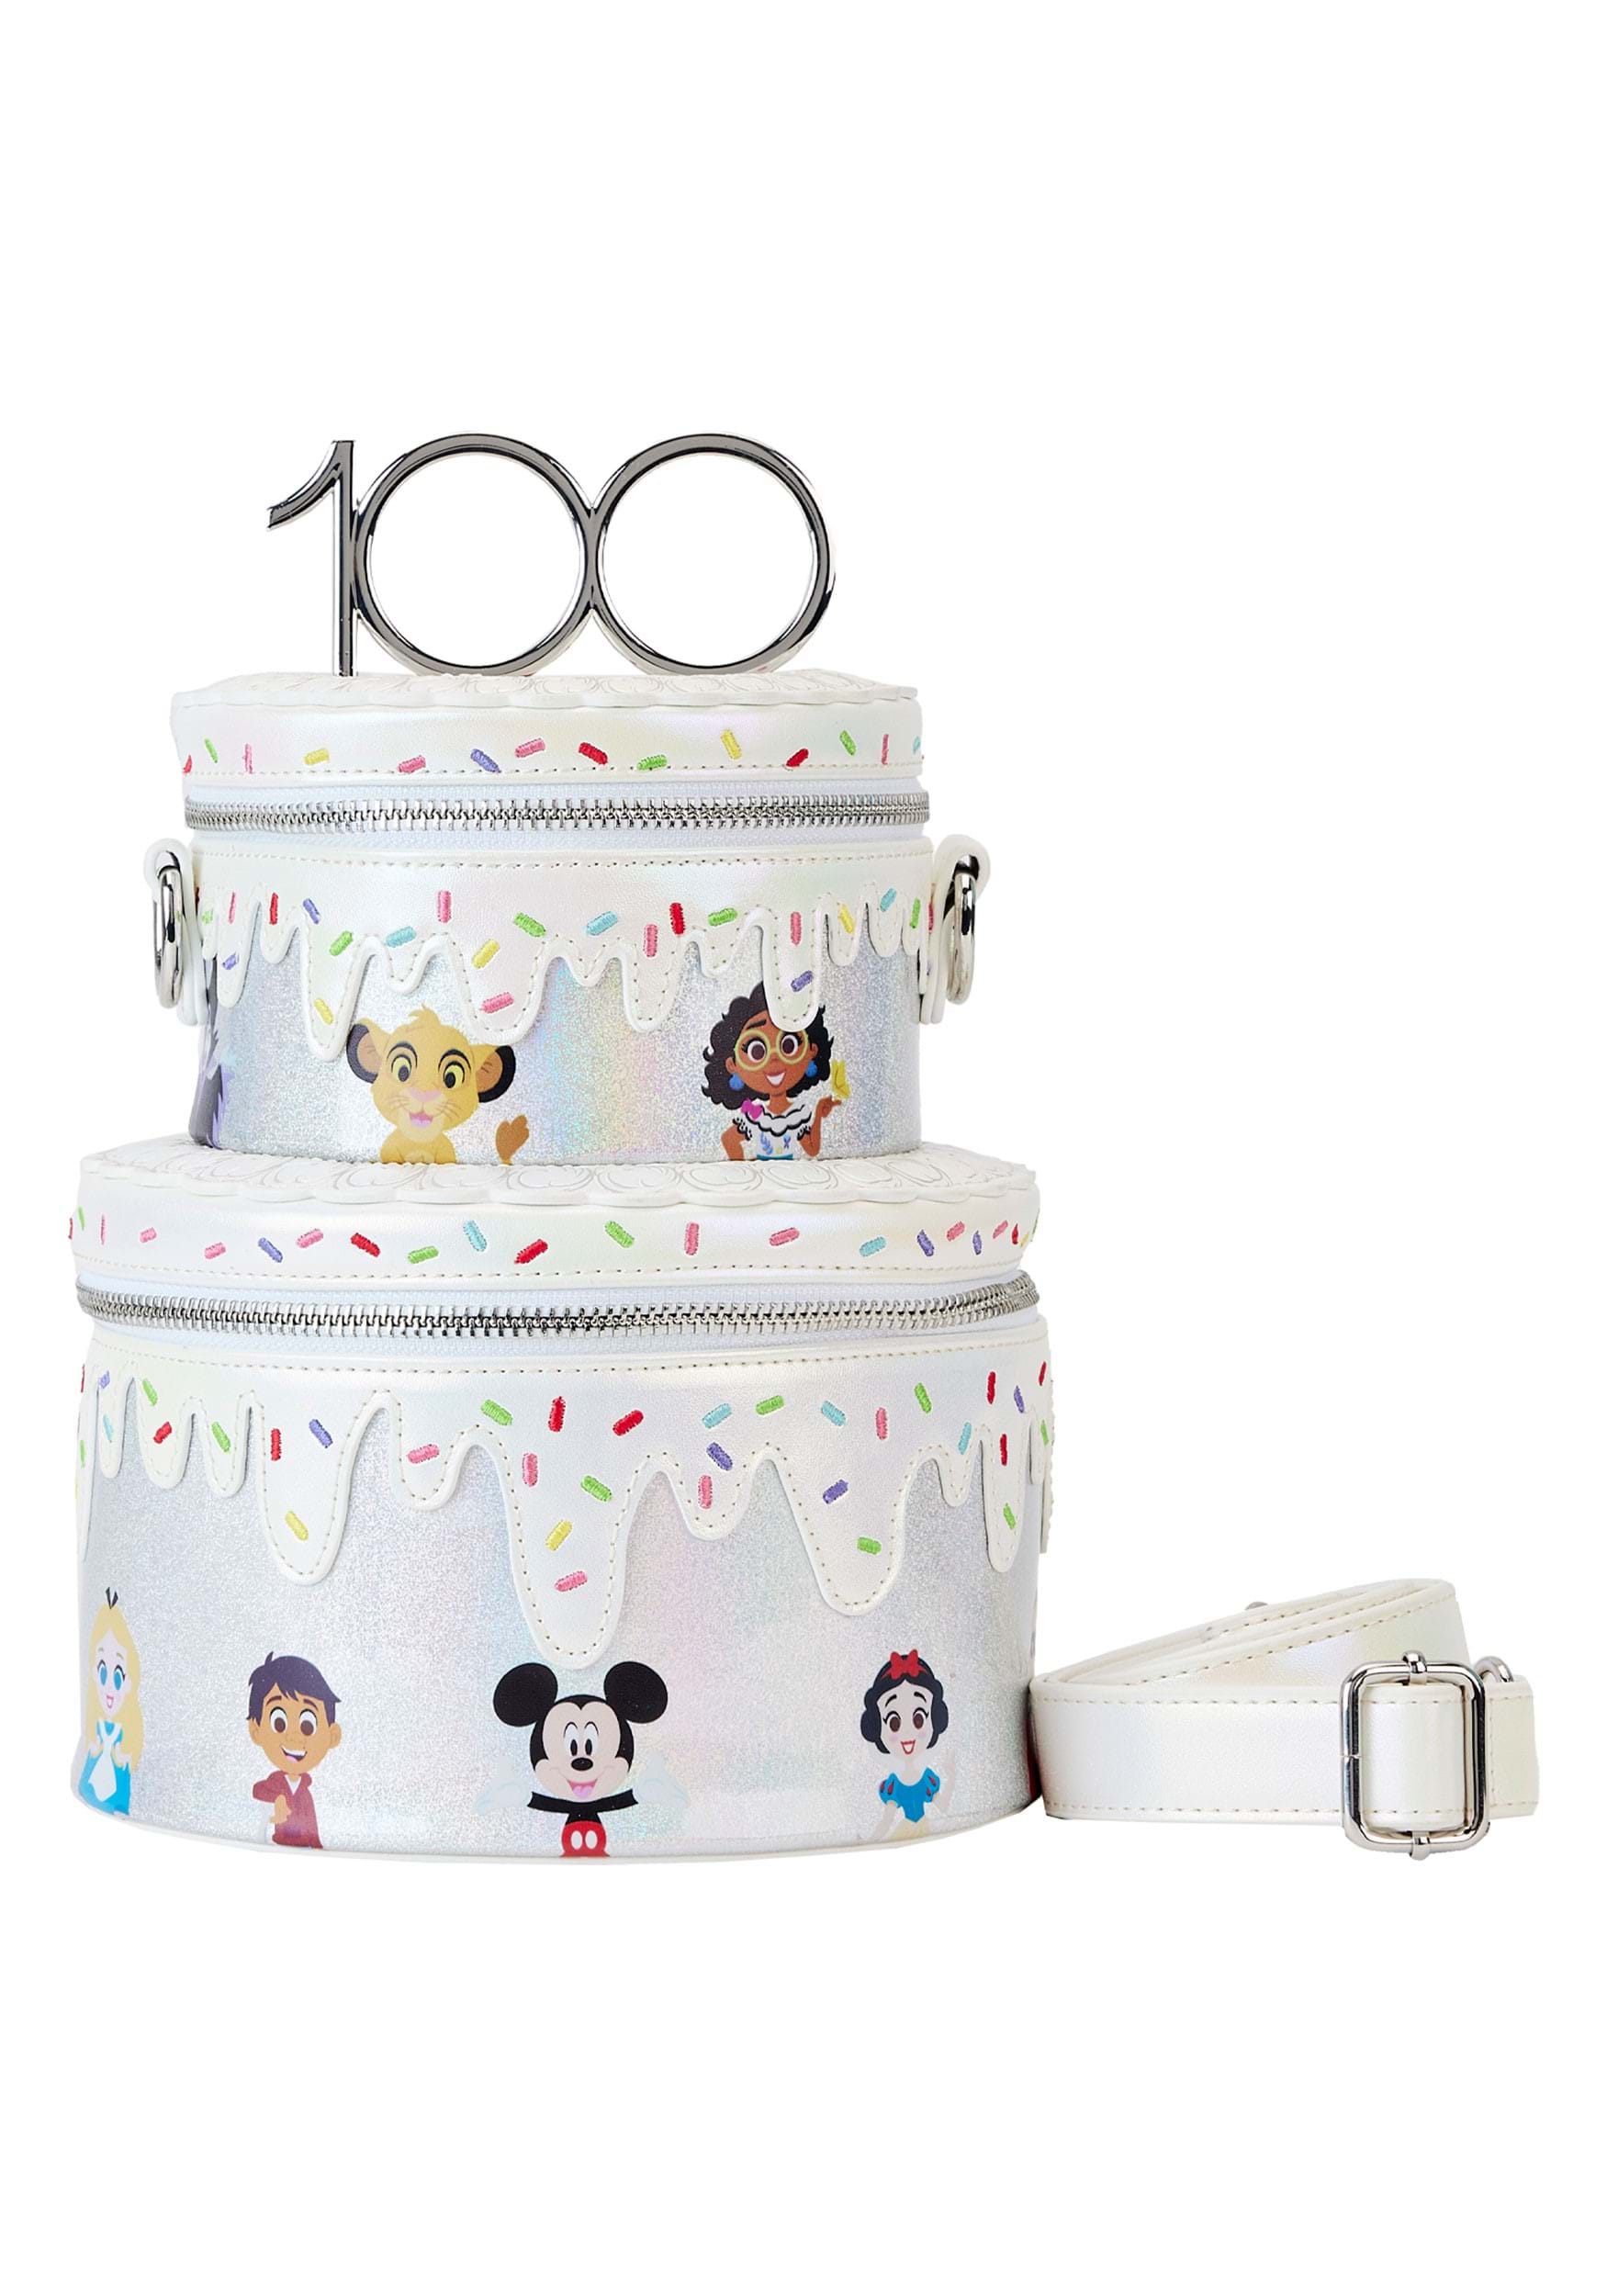 Disney 100 Celebration Cake Crossbody Bag by Loungefly | Disney 100